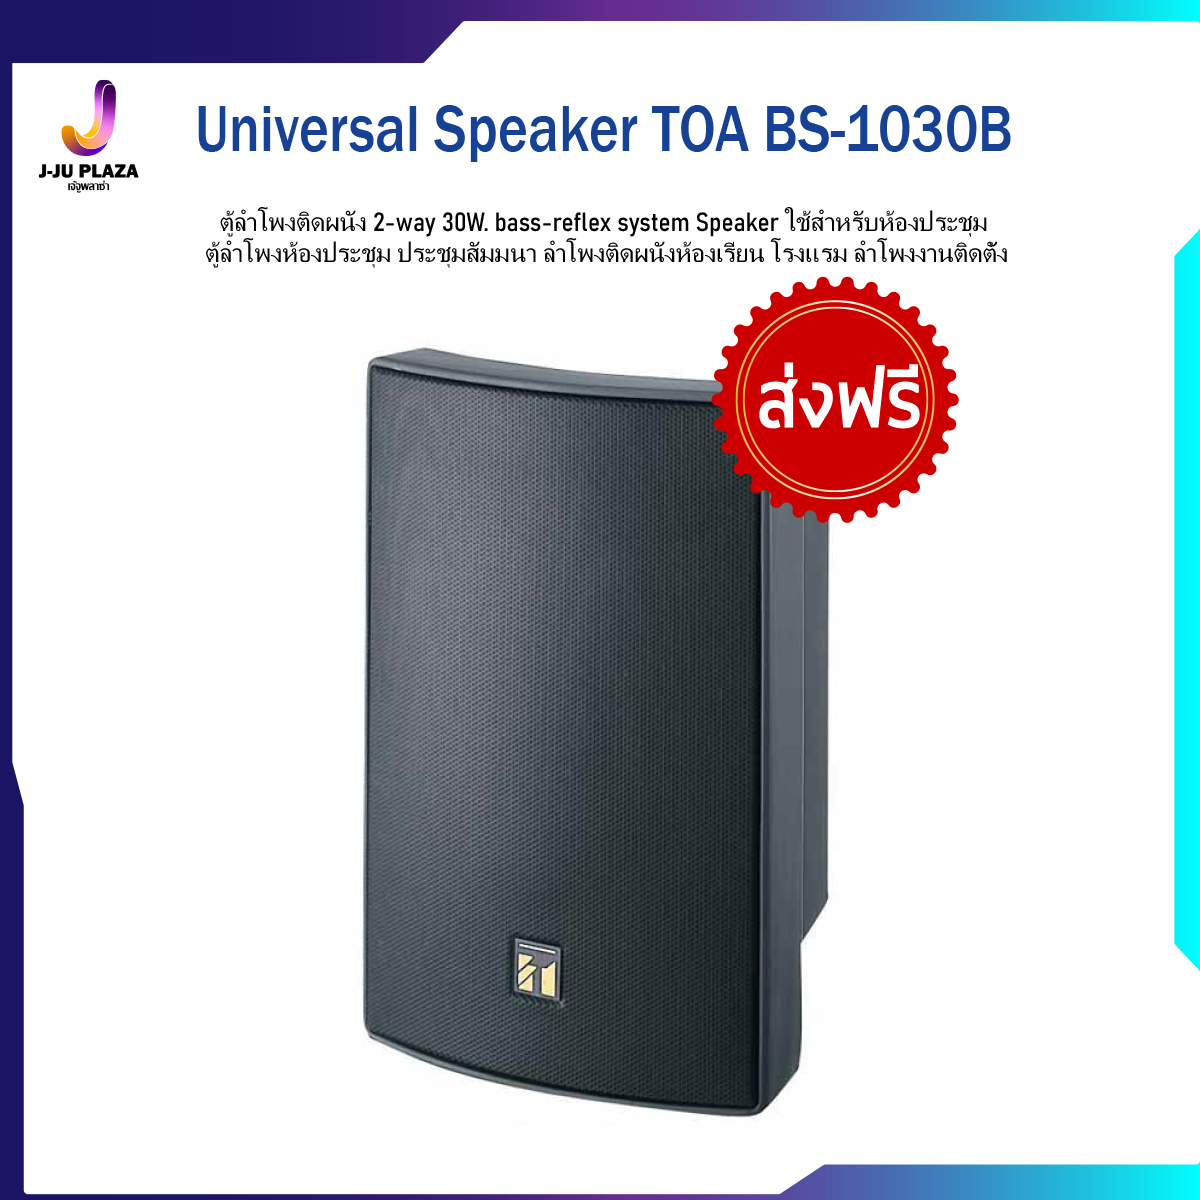 Universal Speaker TOA BS-1030B ตู้ลำโพงติดผนัง พร้อมขาติดตั้ง 2-way bass-reflex  สีดำ Black